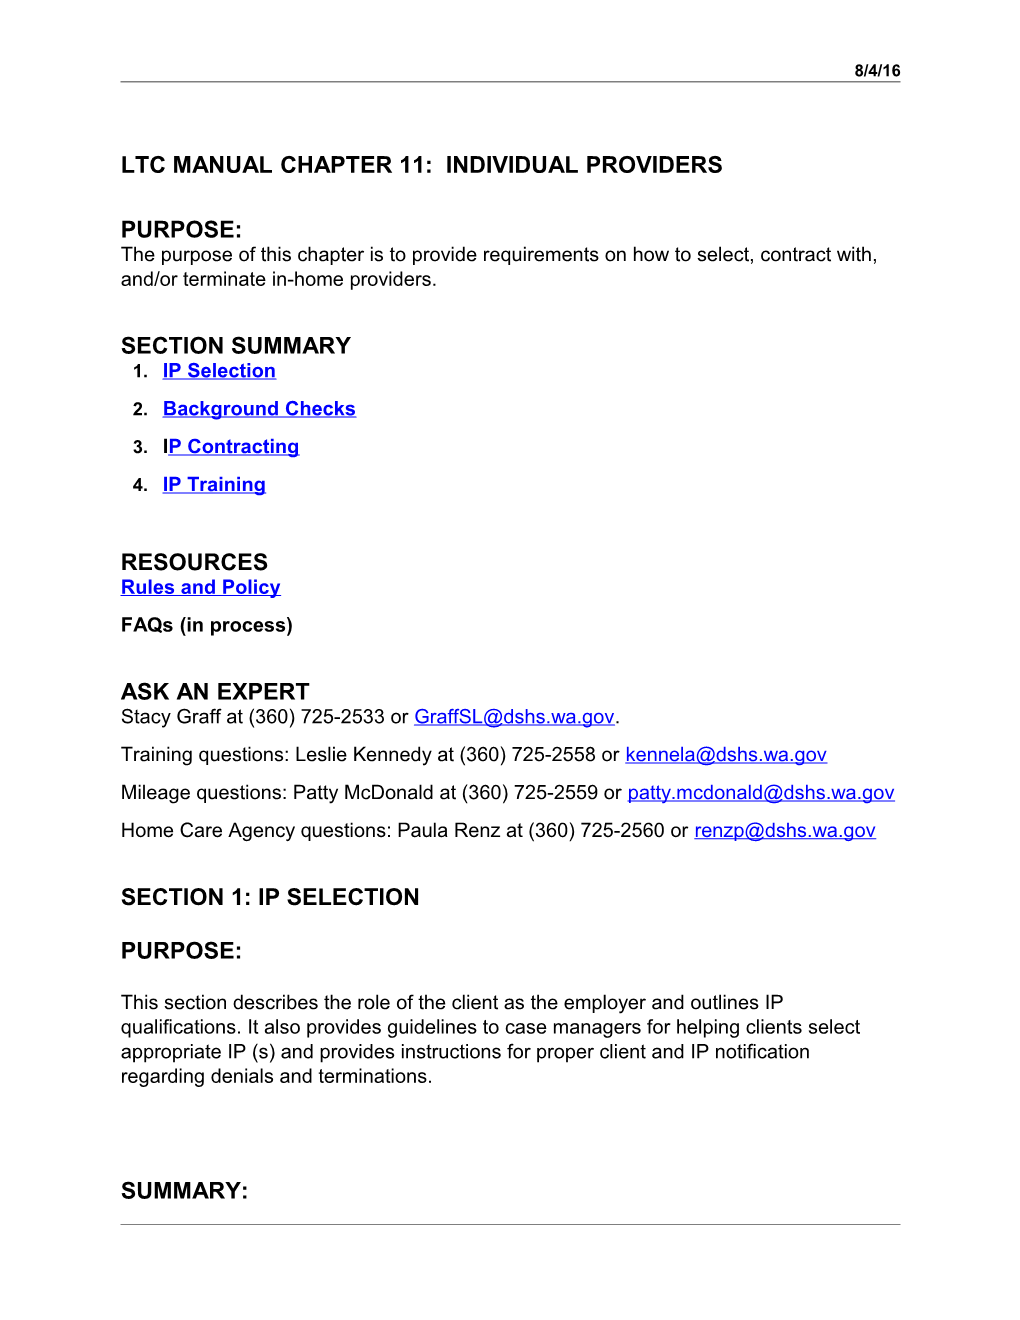 LTC Manual Chapter 11: Individual Providers